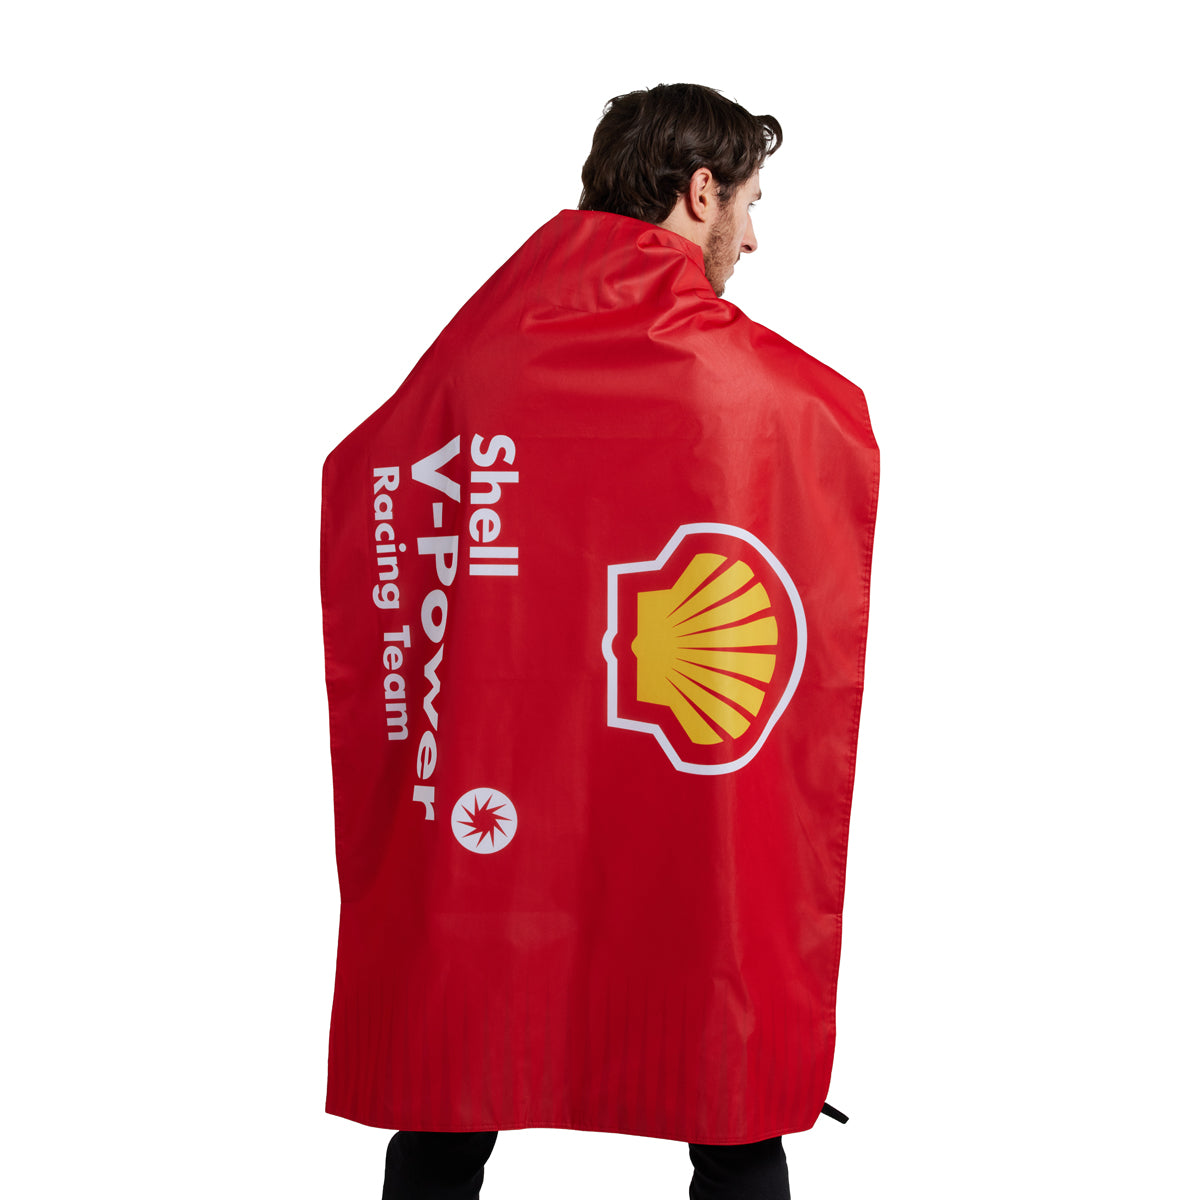 Shell V-Power Racing Team Flag